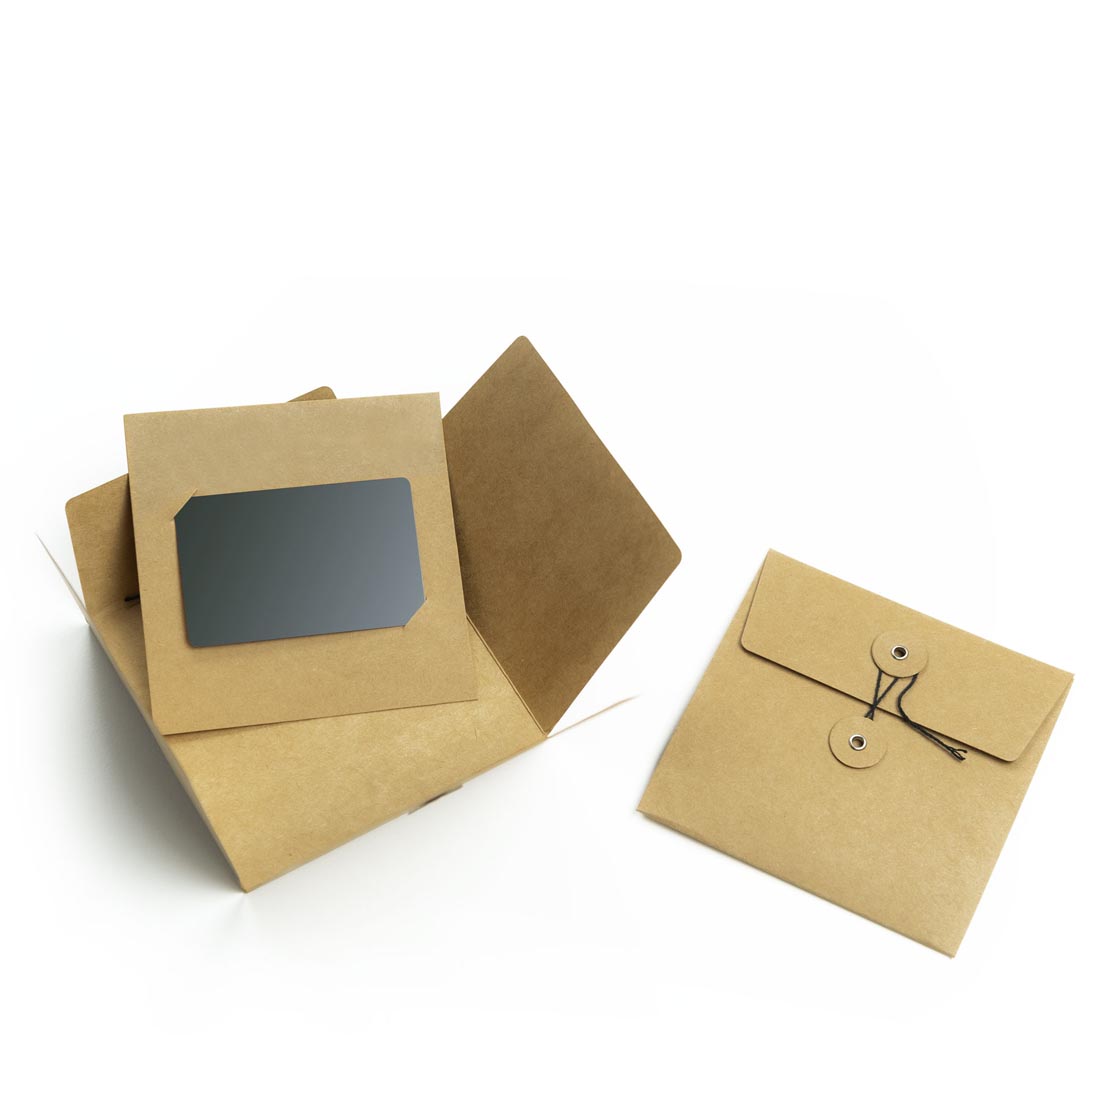 labyrint Voorspeller Kosciuszko Cadeaukaart in envelop, bruin kraftpapier. GIFT CARD NOT INCLUDED | Scanlux  Packaging